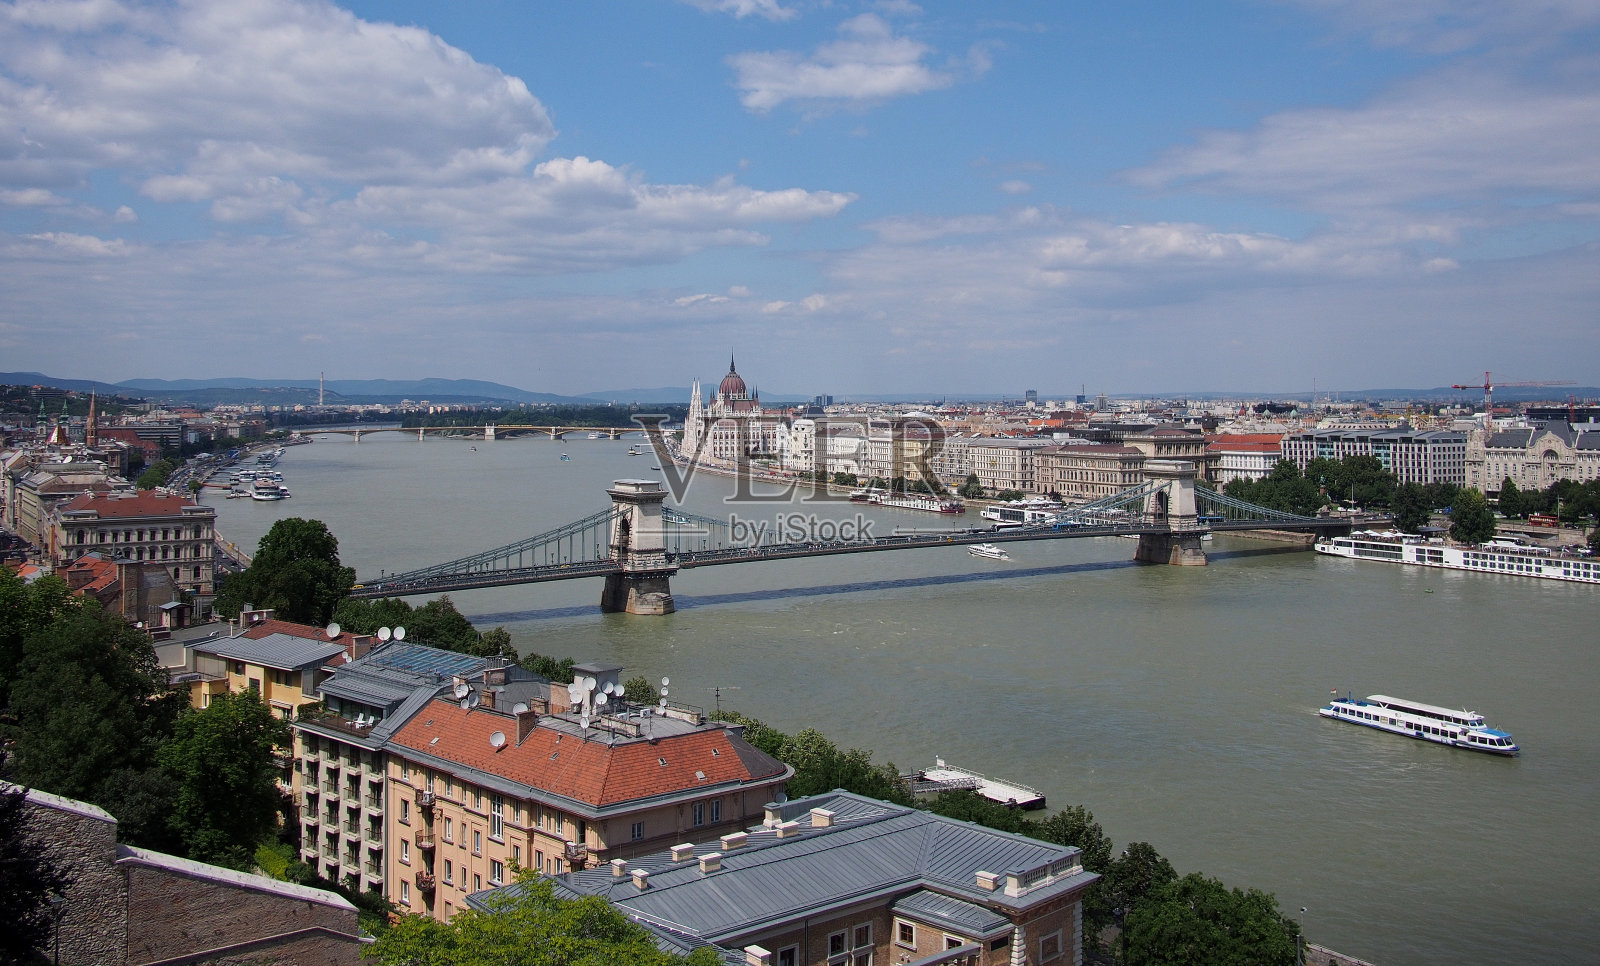 Széchenyi匈牙利布达佩斯的铁链桥和国会大厦照片摄影图片